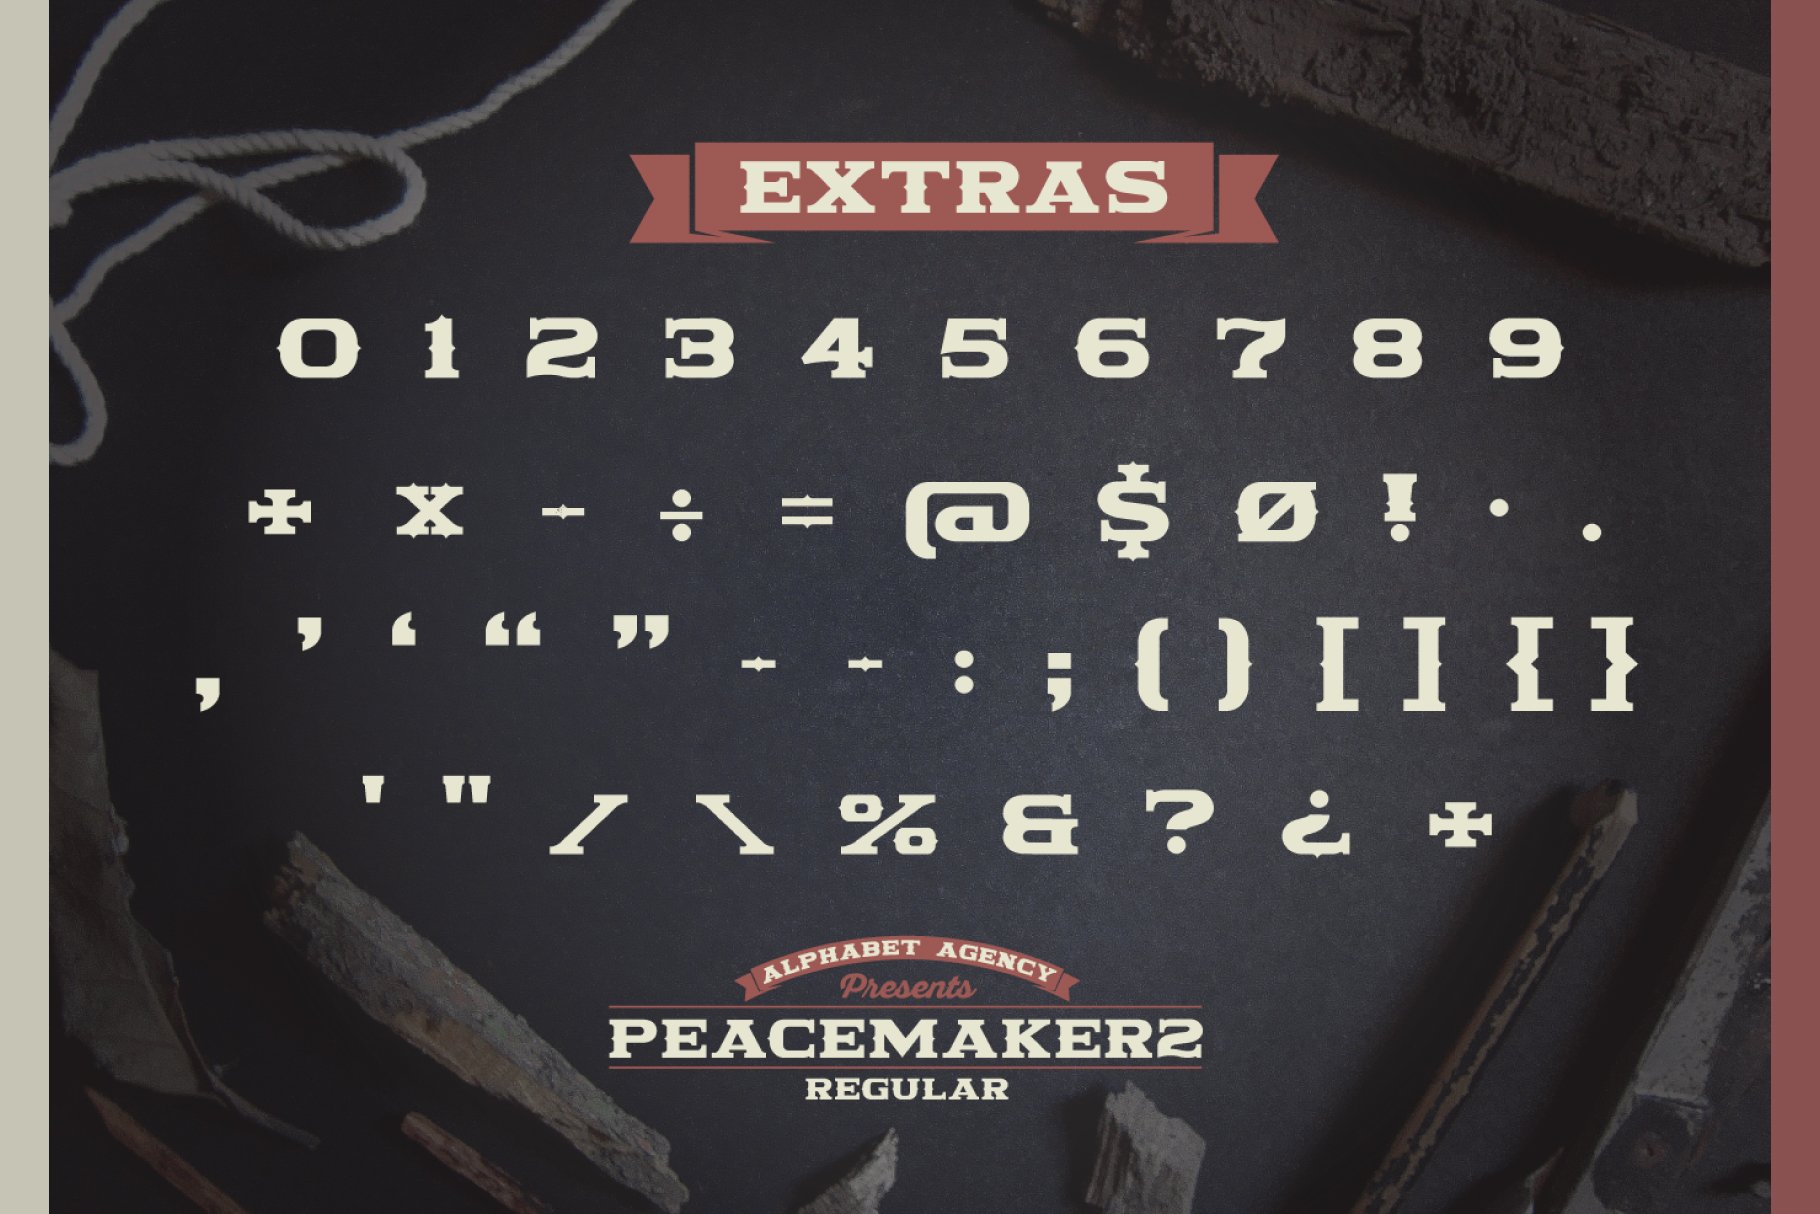 peacemaker2 regular extras1 1820x1214 249